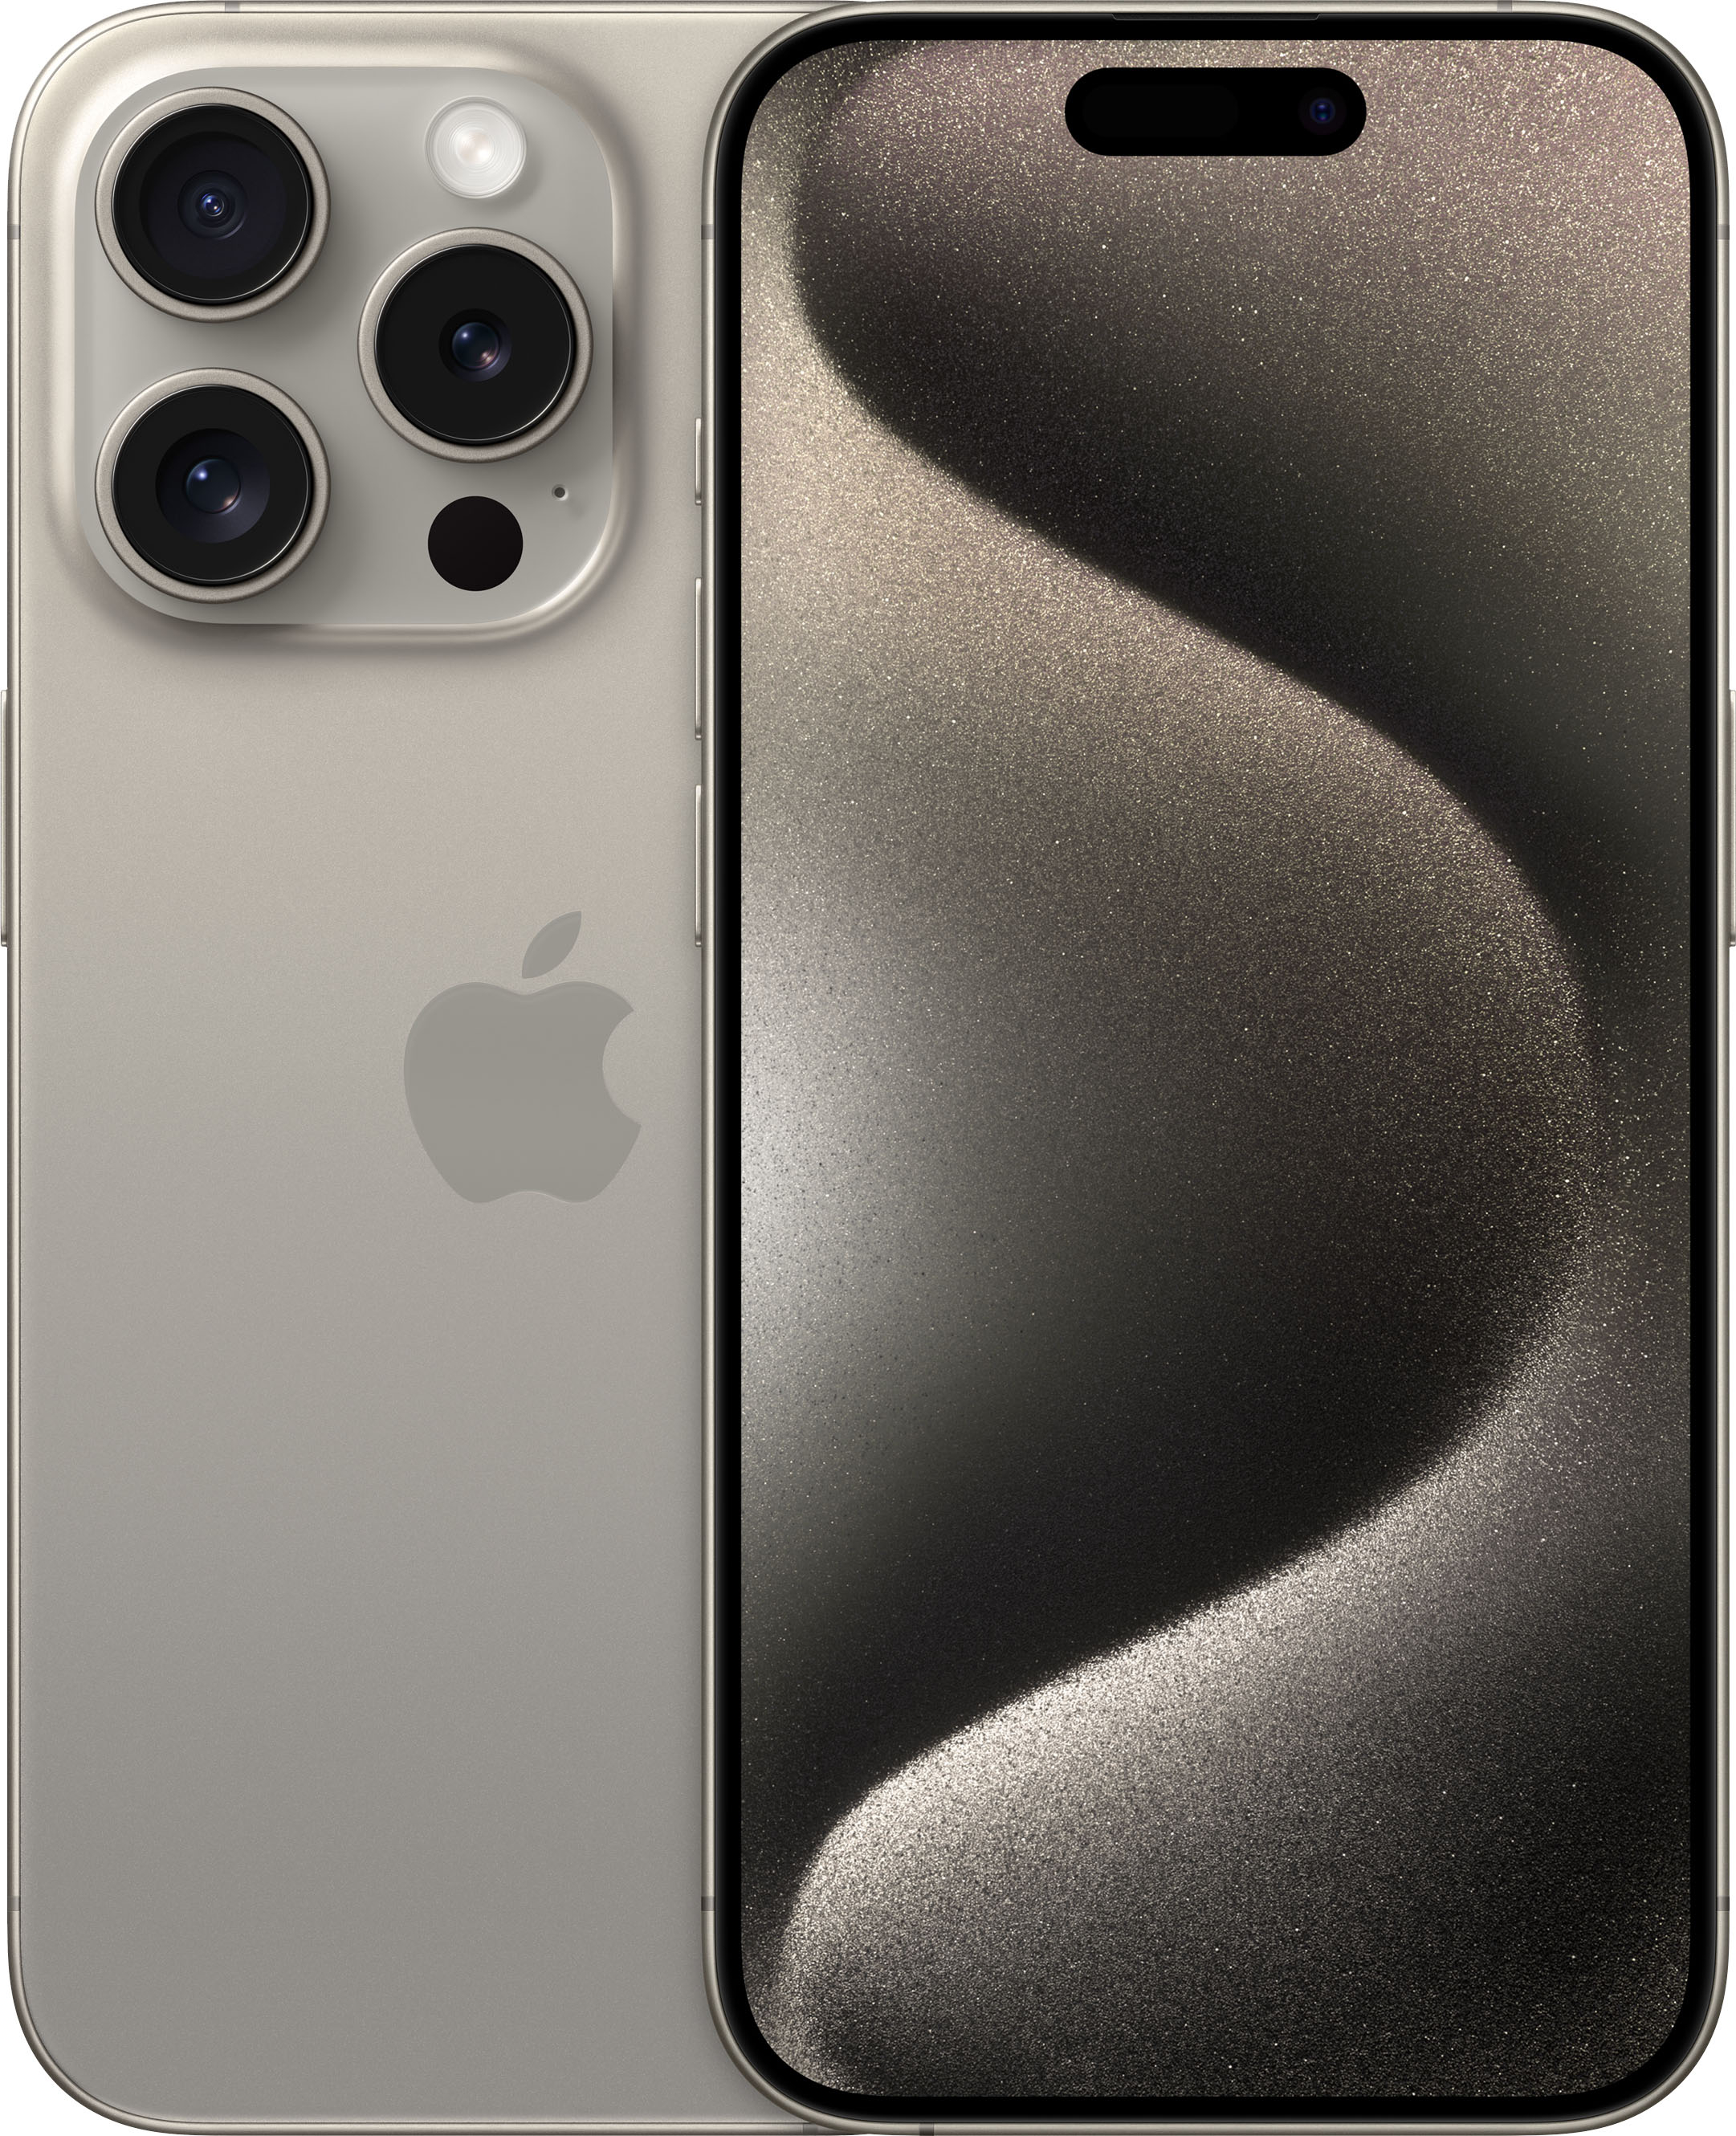 Apple iPhone 8 Plus 64GB Space Gray (Verizon) MQ8D2LL/A - Best Buy